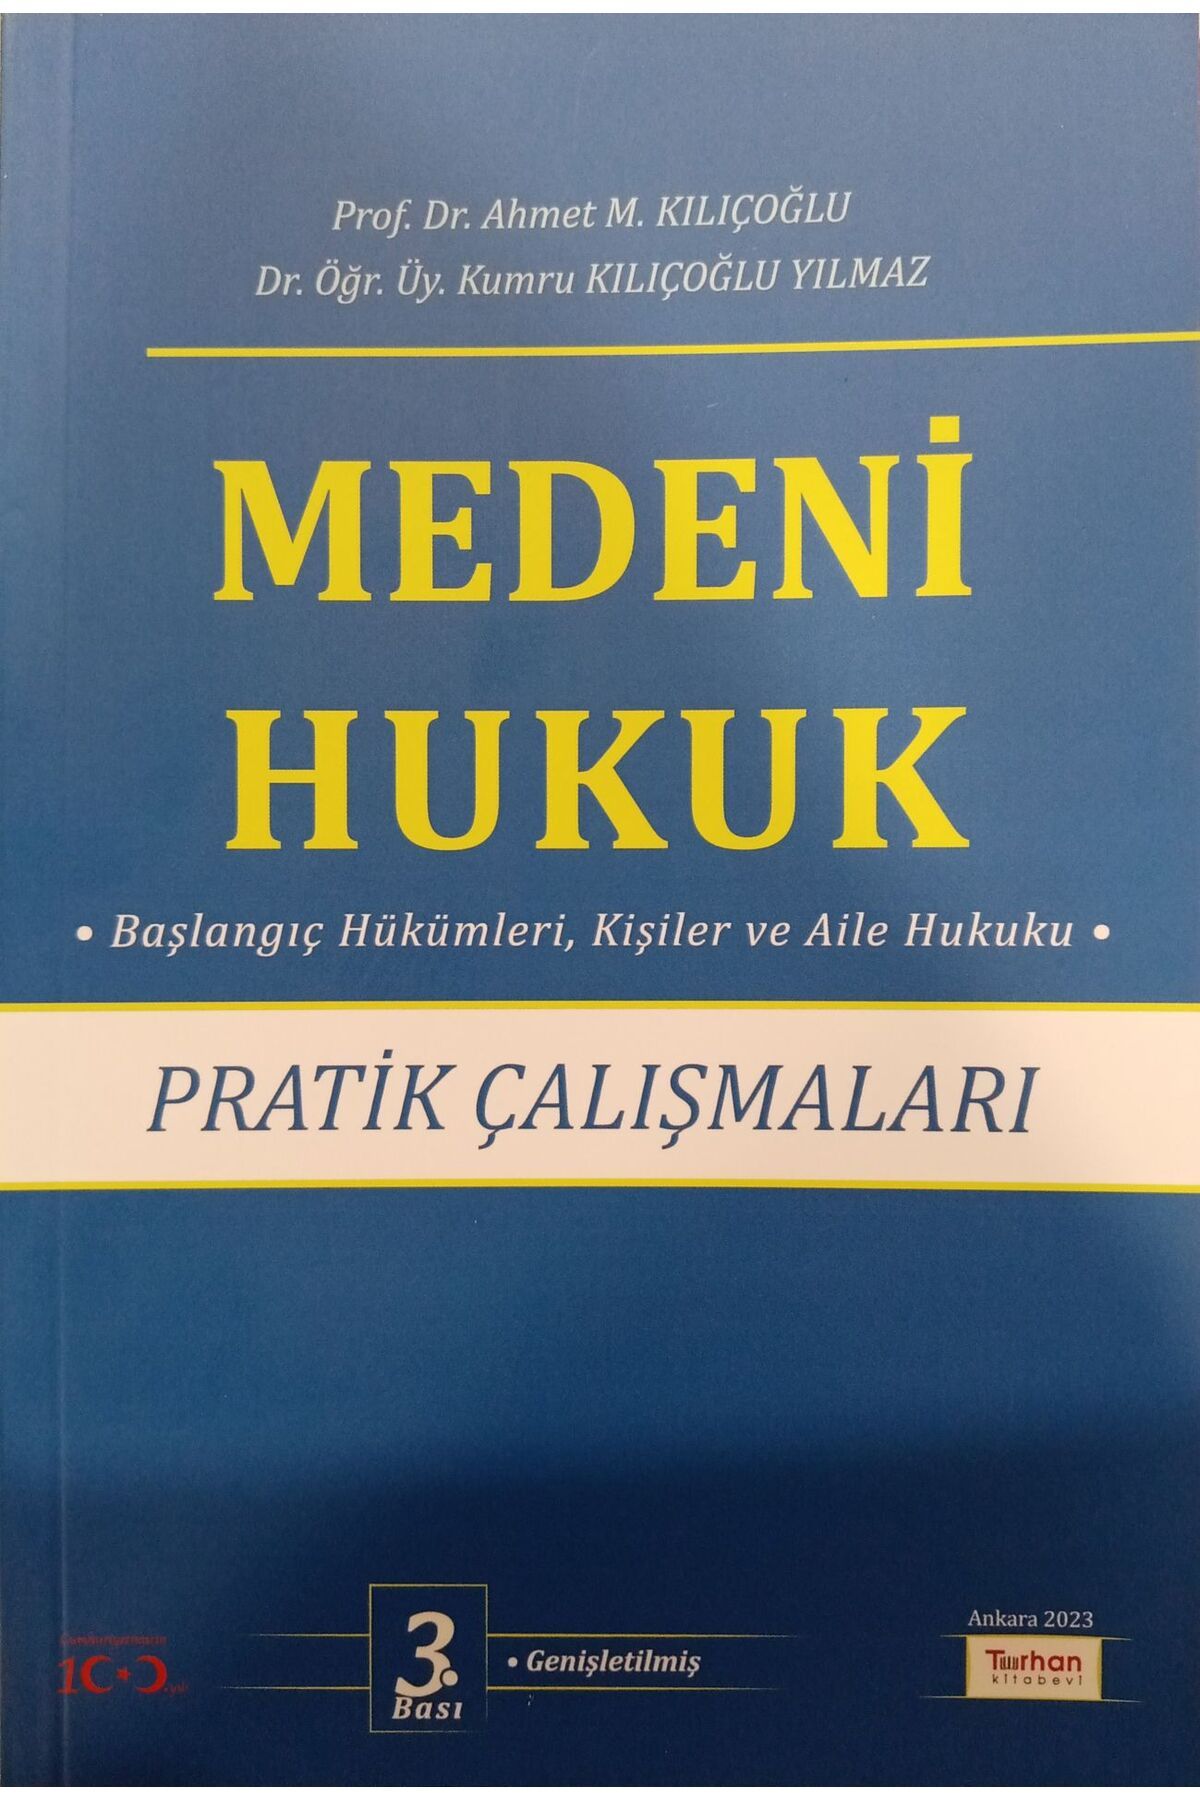 Turhan Kitabevi MEDENİ HUKUK PRATİK ÇALIŞMLARI 3.BASI 2023